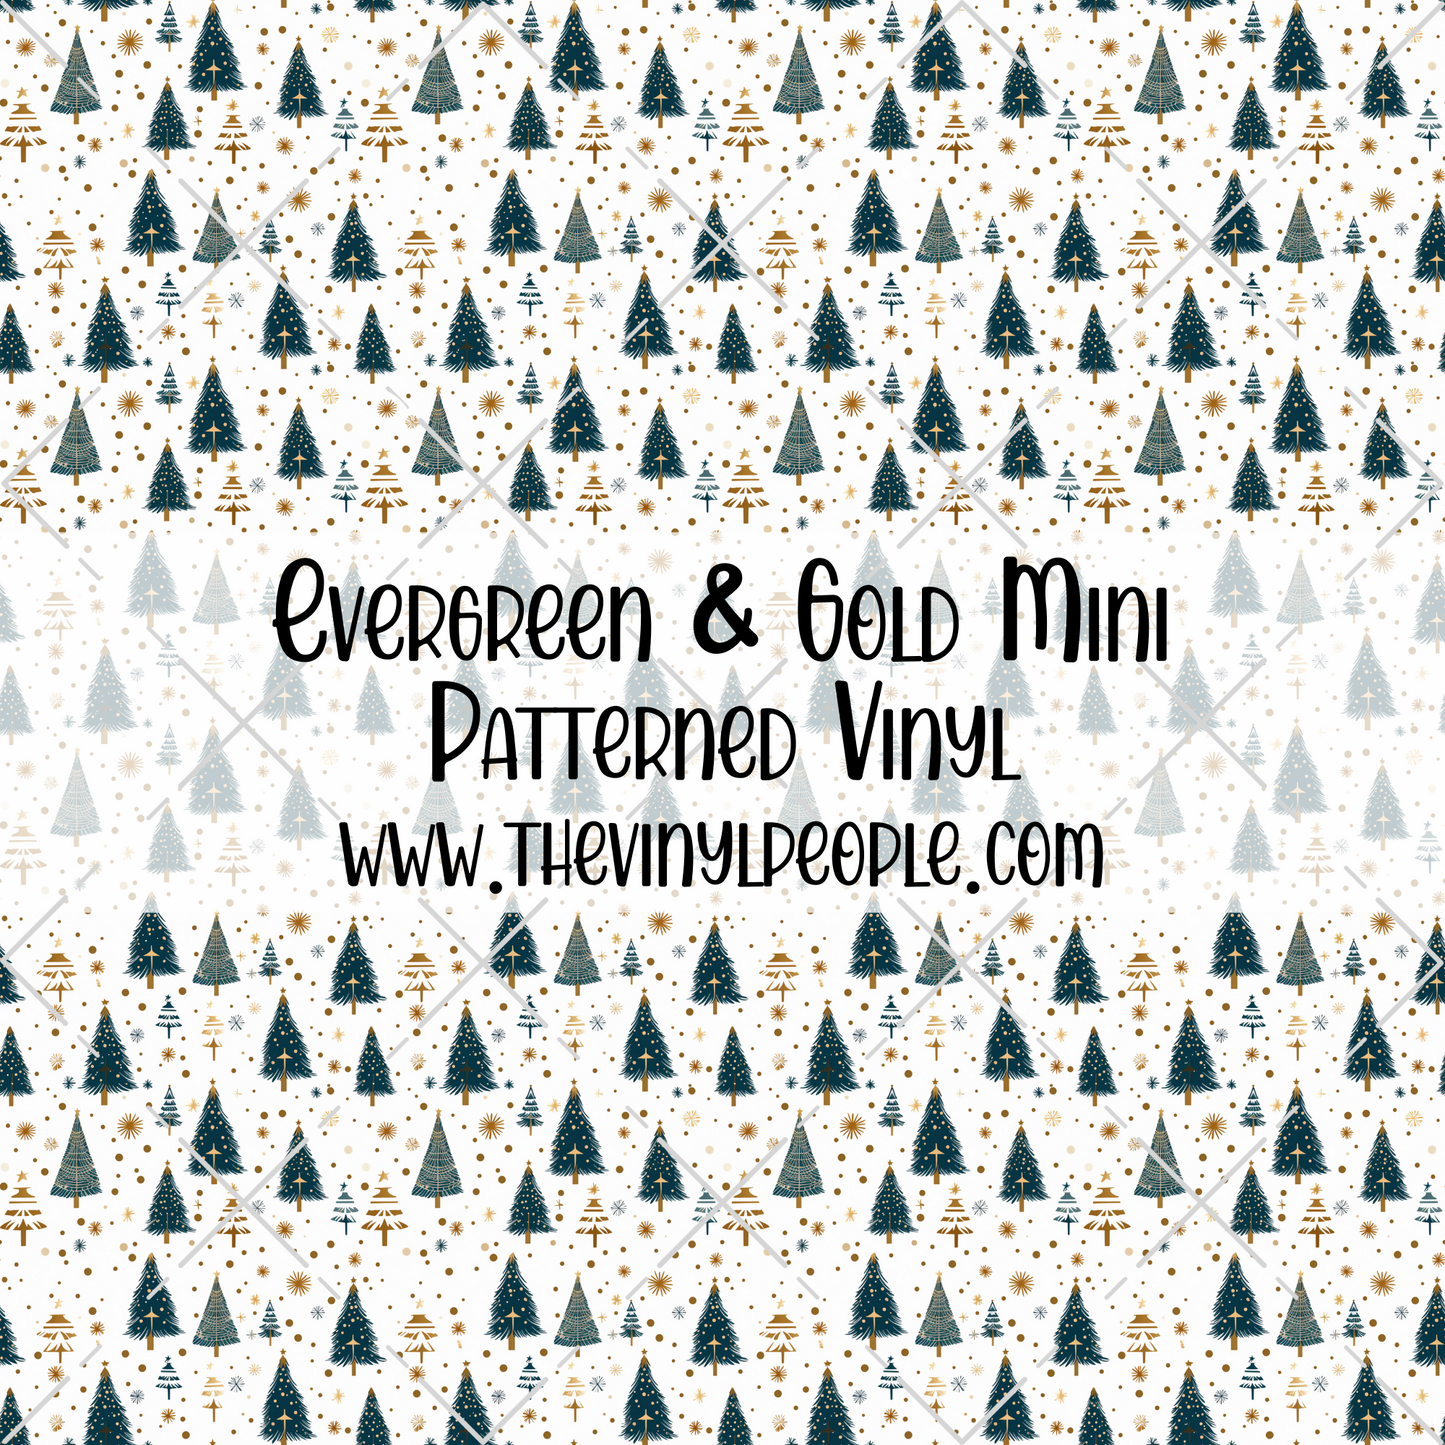 Evergreen & Gold Patterned Vinyl